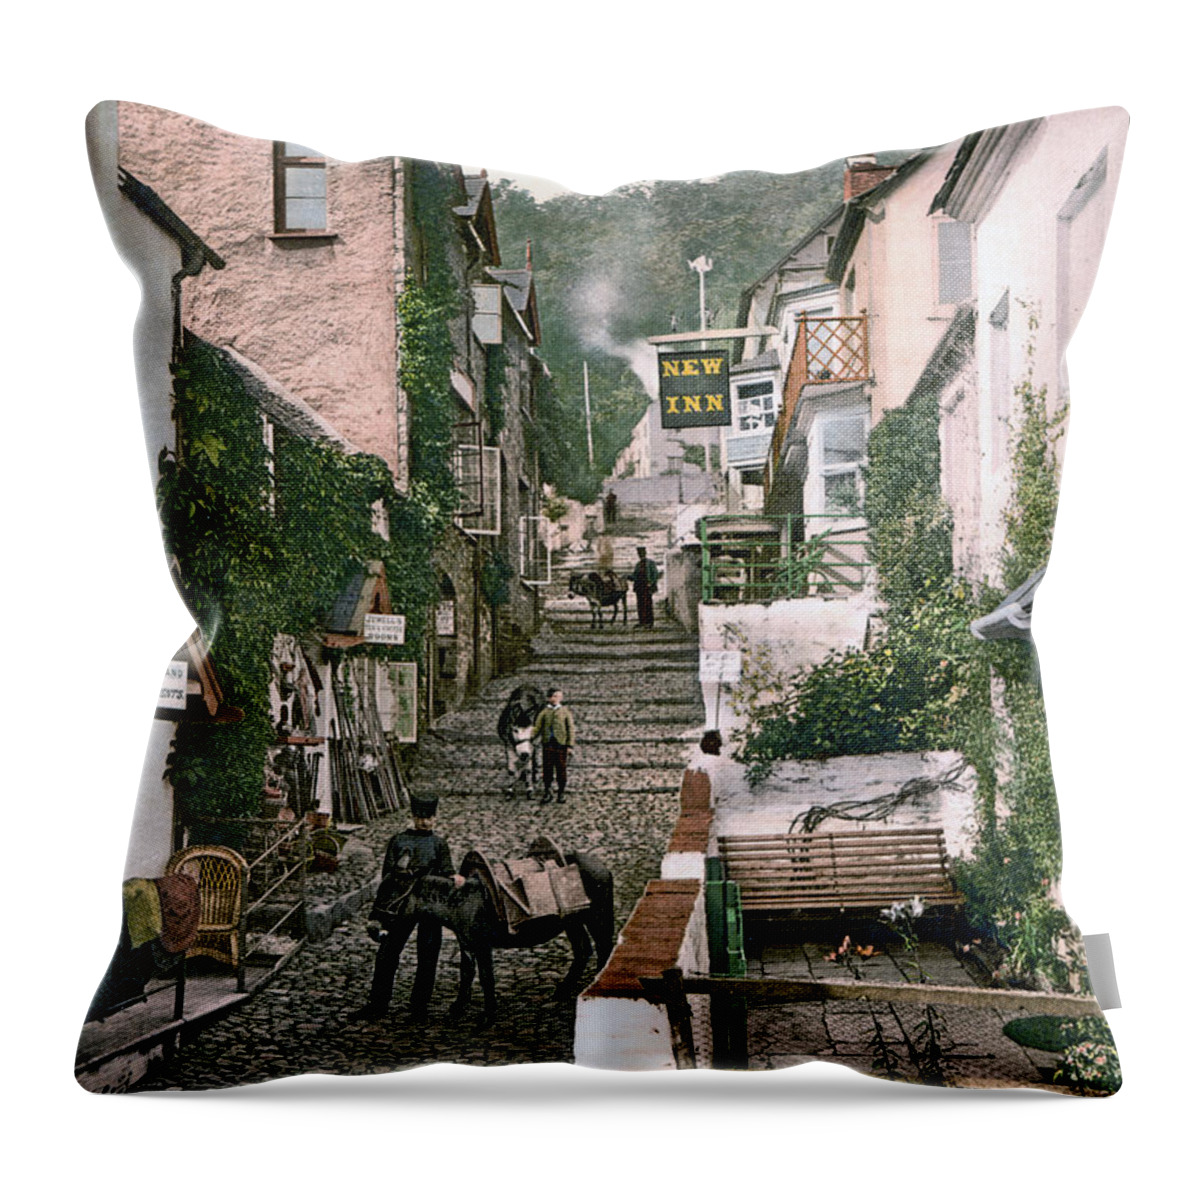 Clovelly Throw Pillow featuring the photograph Clovelly - England - High Street by International Images